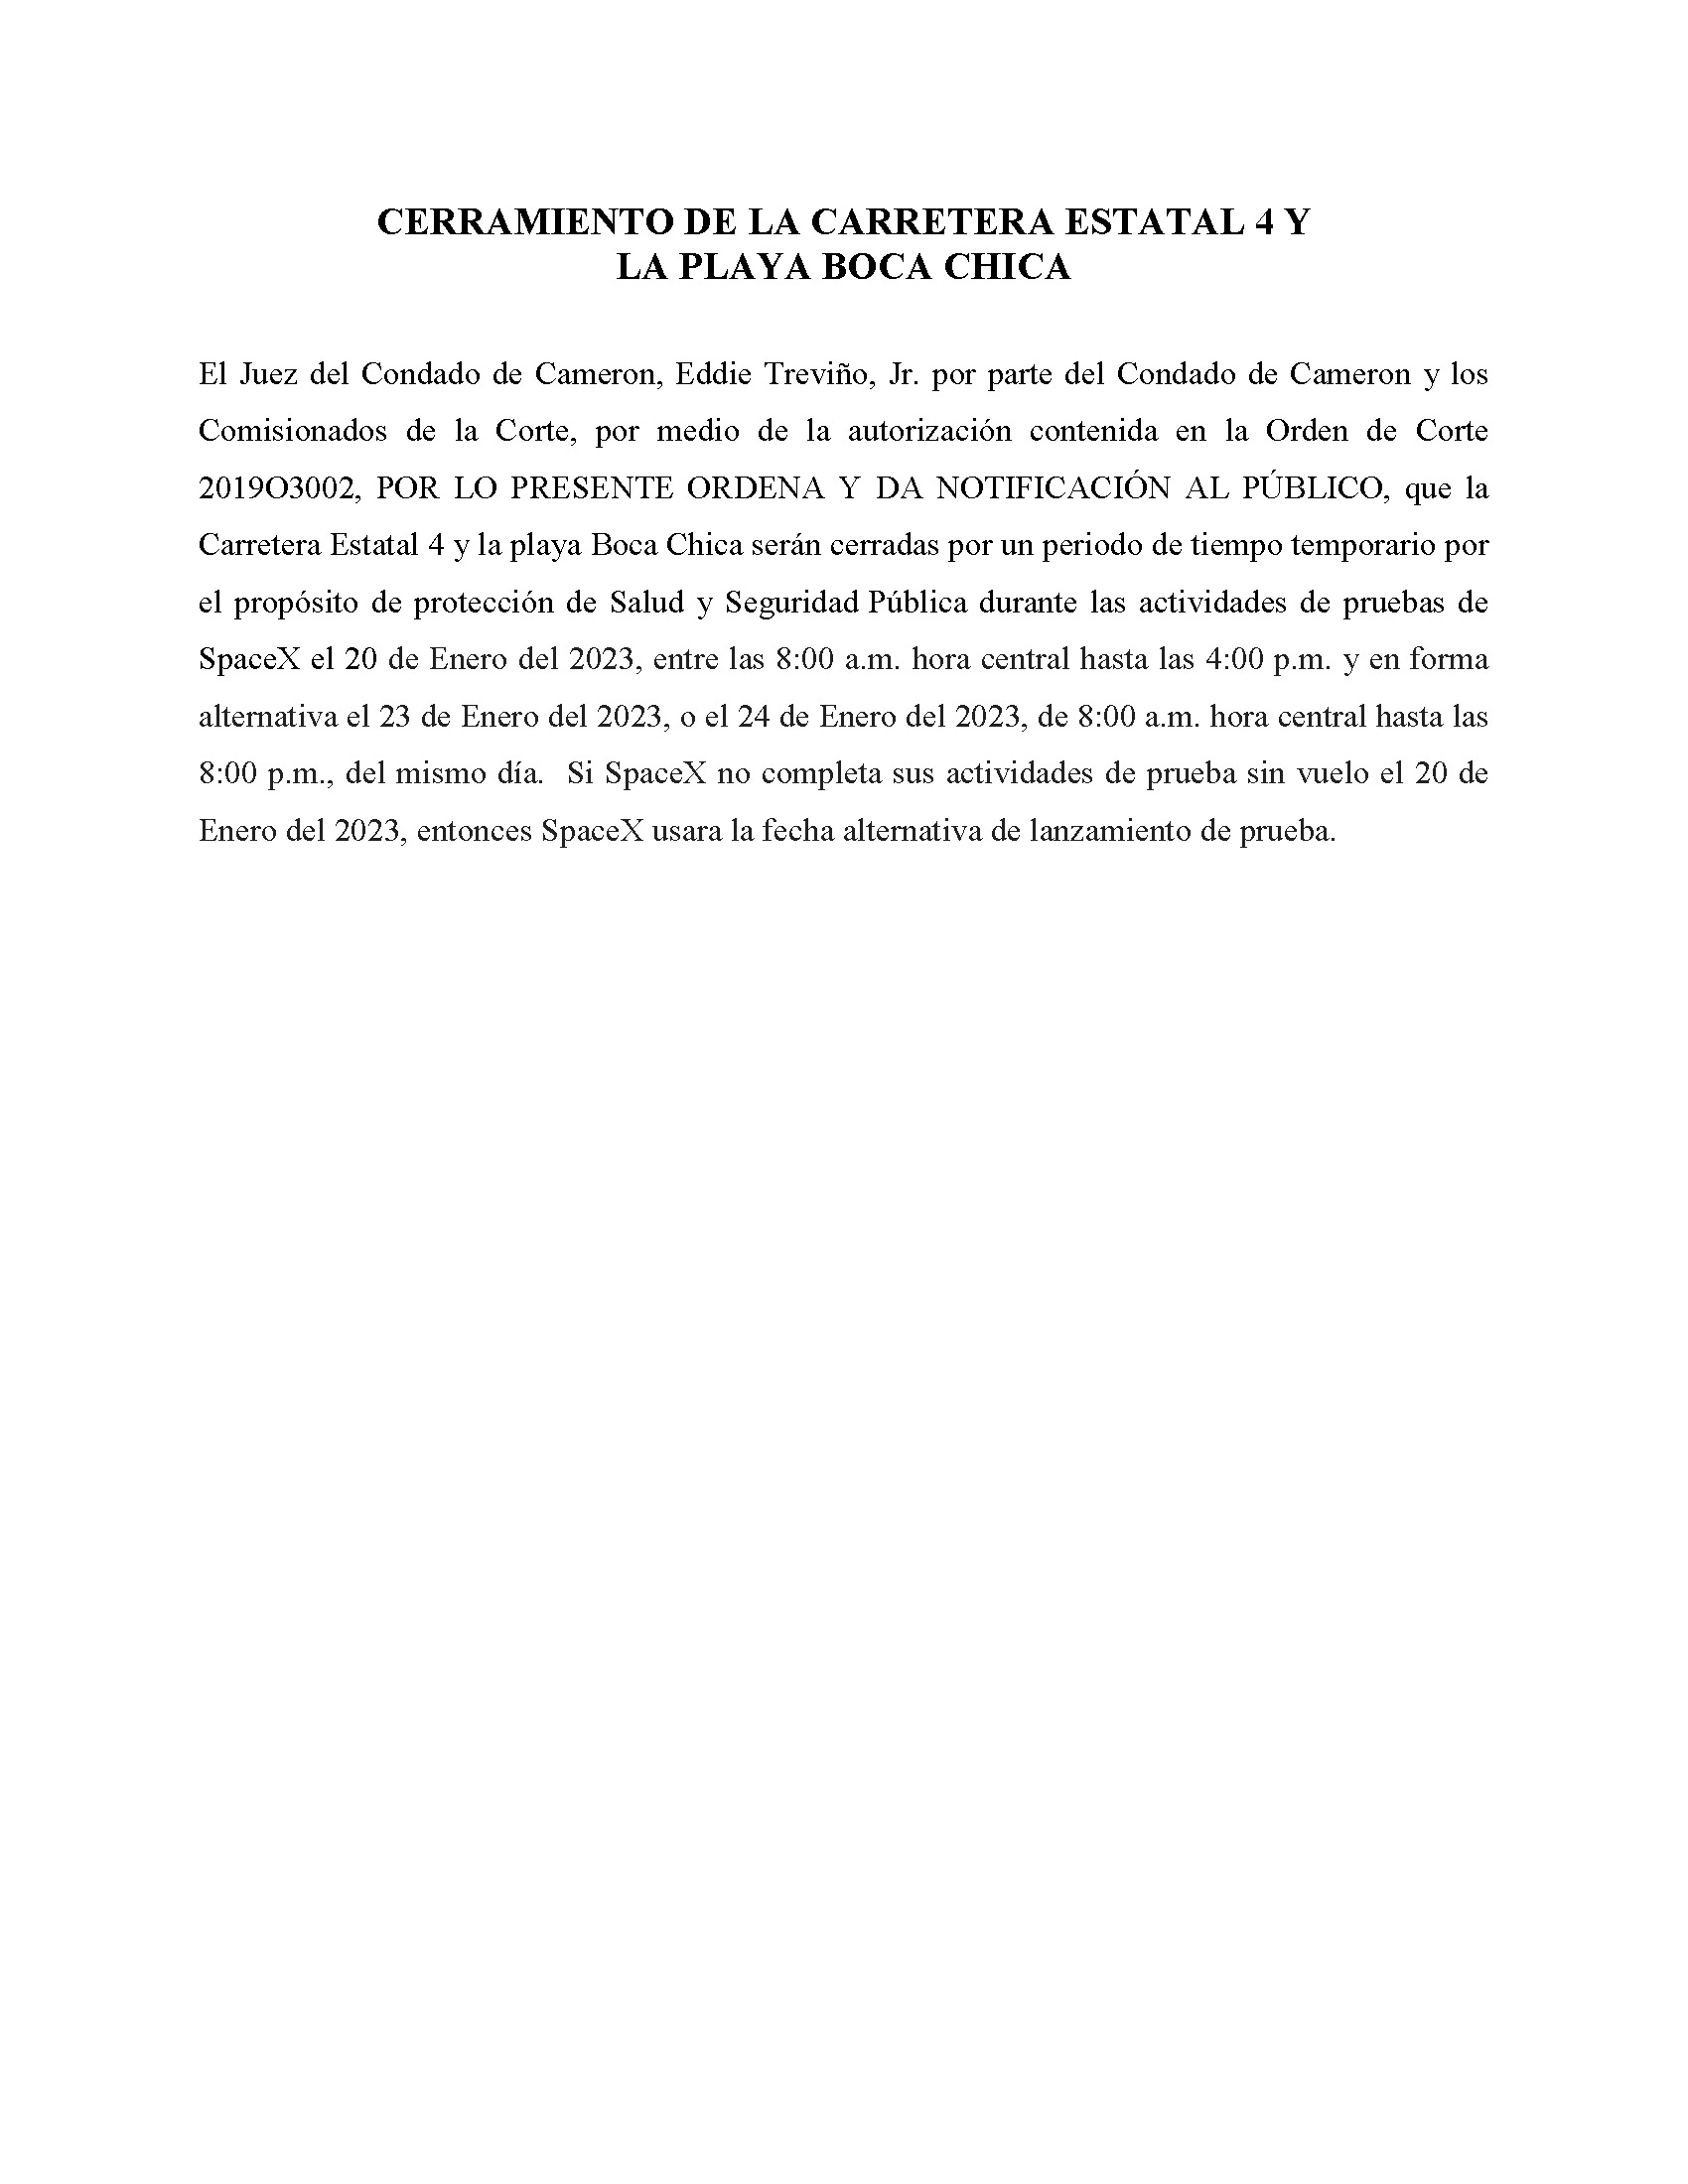 ORDER.CLOSURE OF HIGHWAY 4 Y LA PLAYA BOCA CHICA.SPANISH.01.20.23